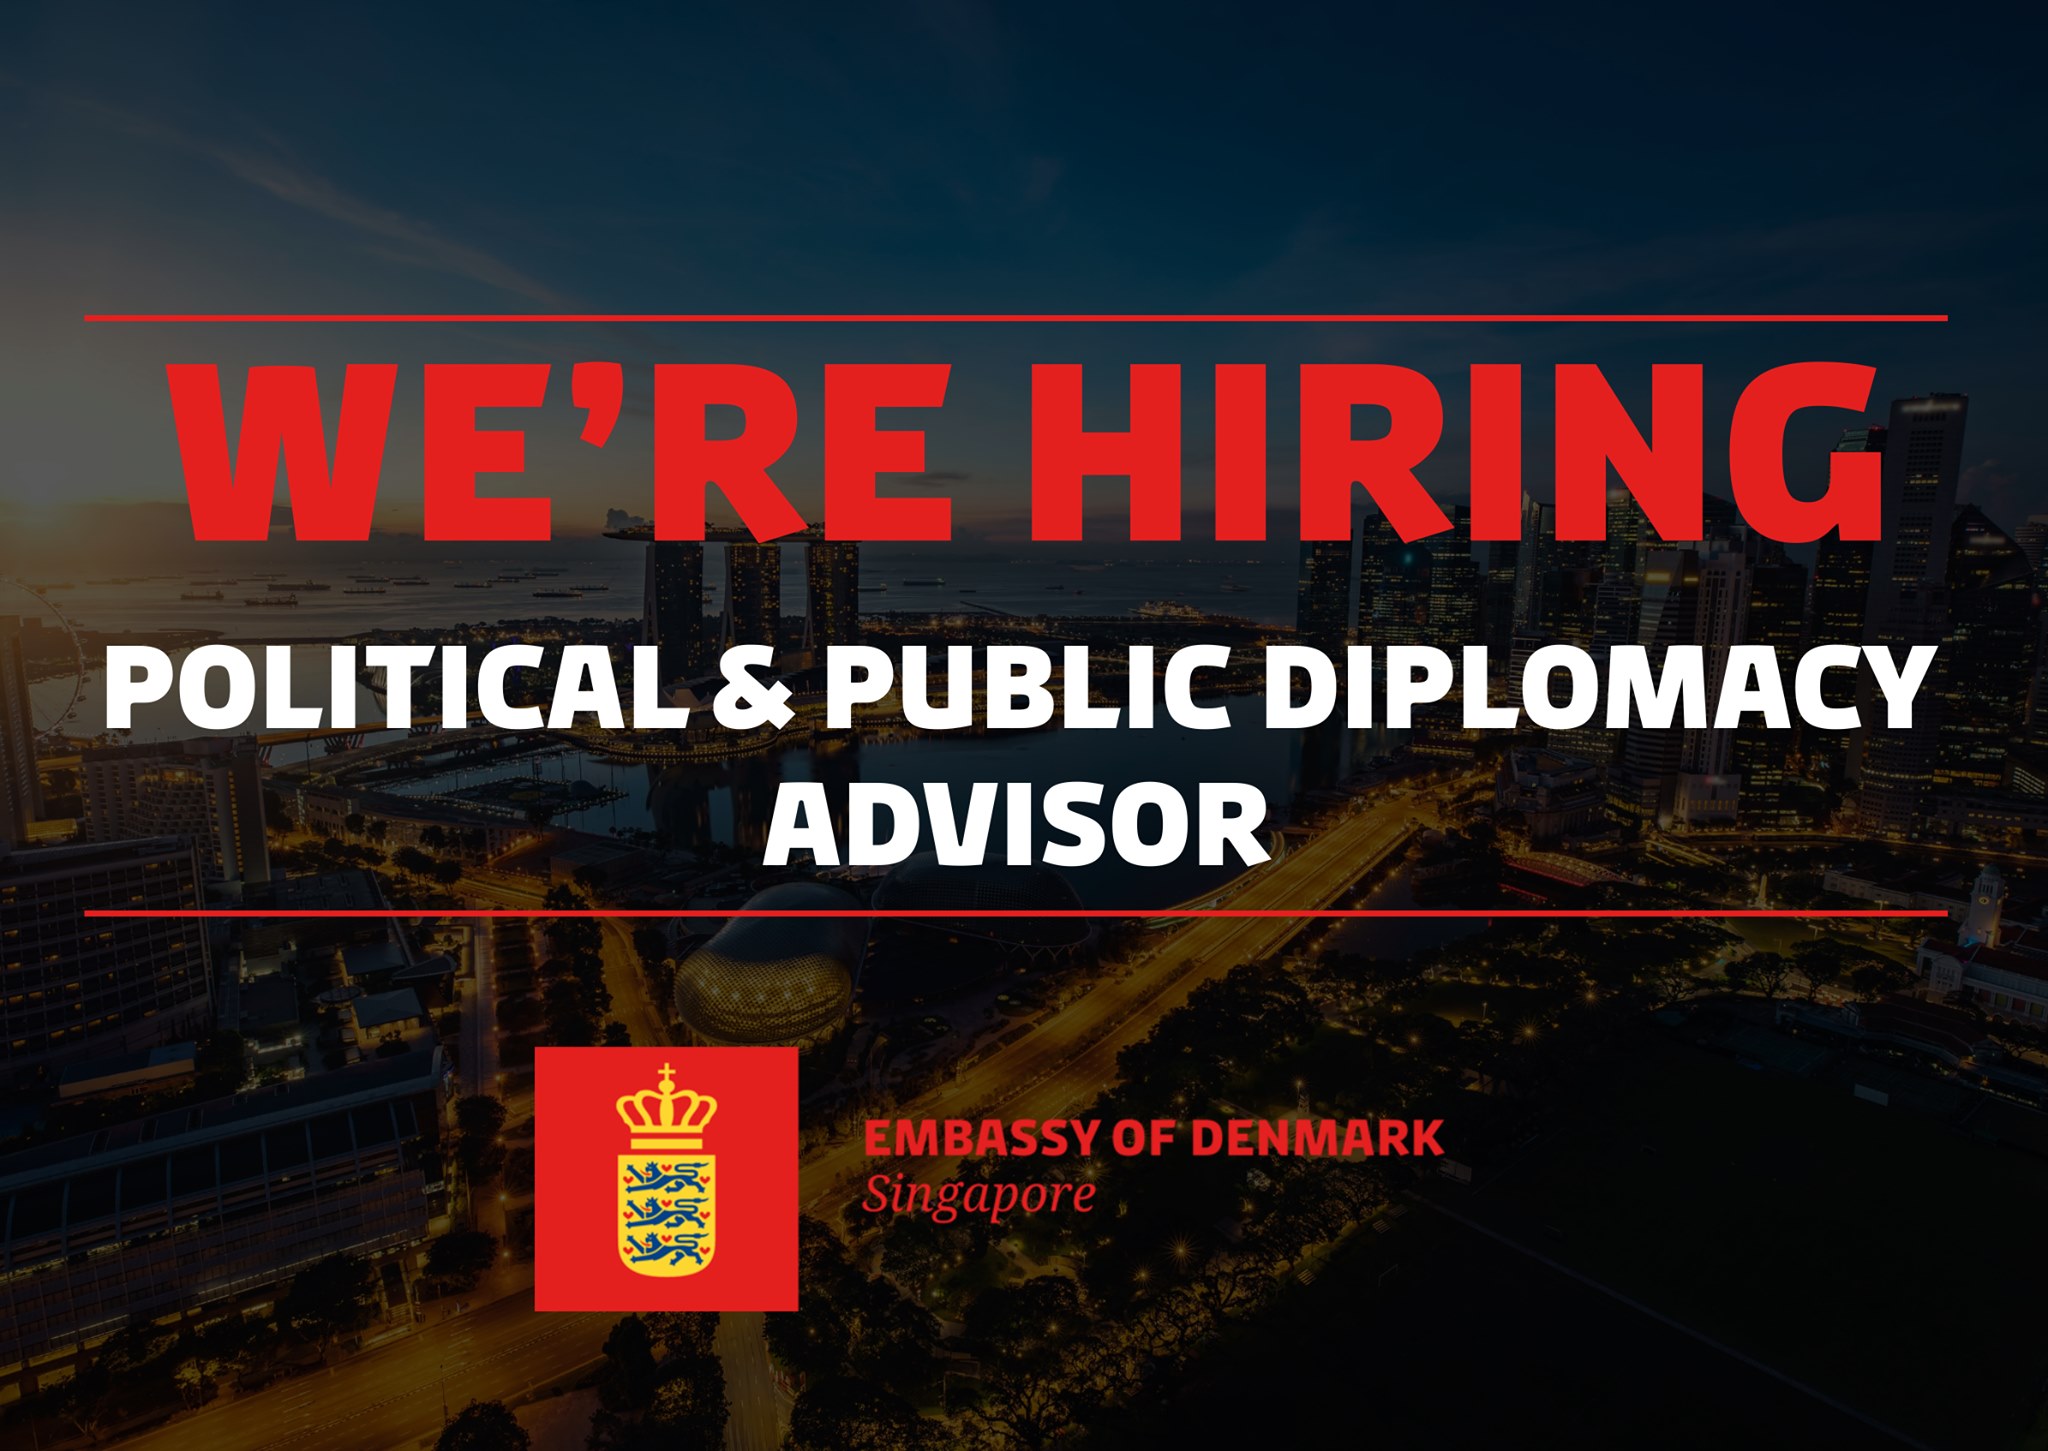 Danish embassy in Singapore looking for Political & Public Diplomacy Advisor